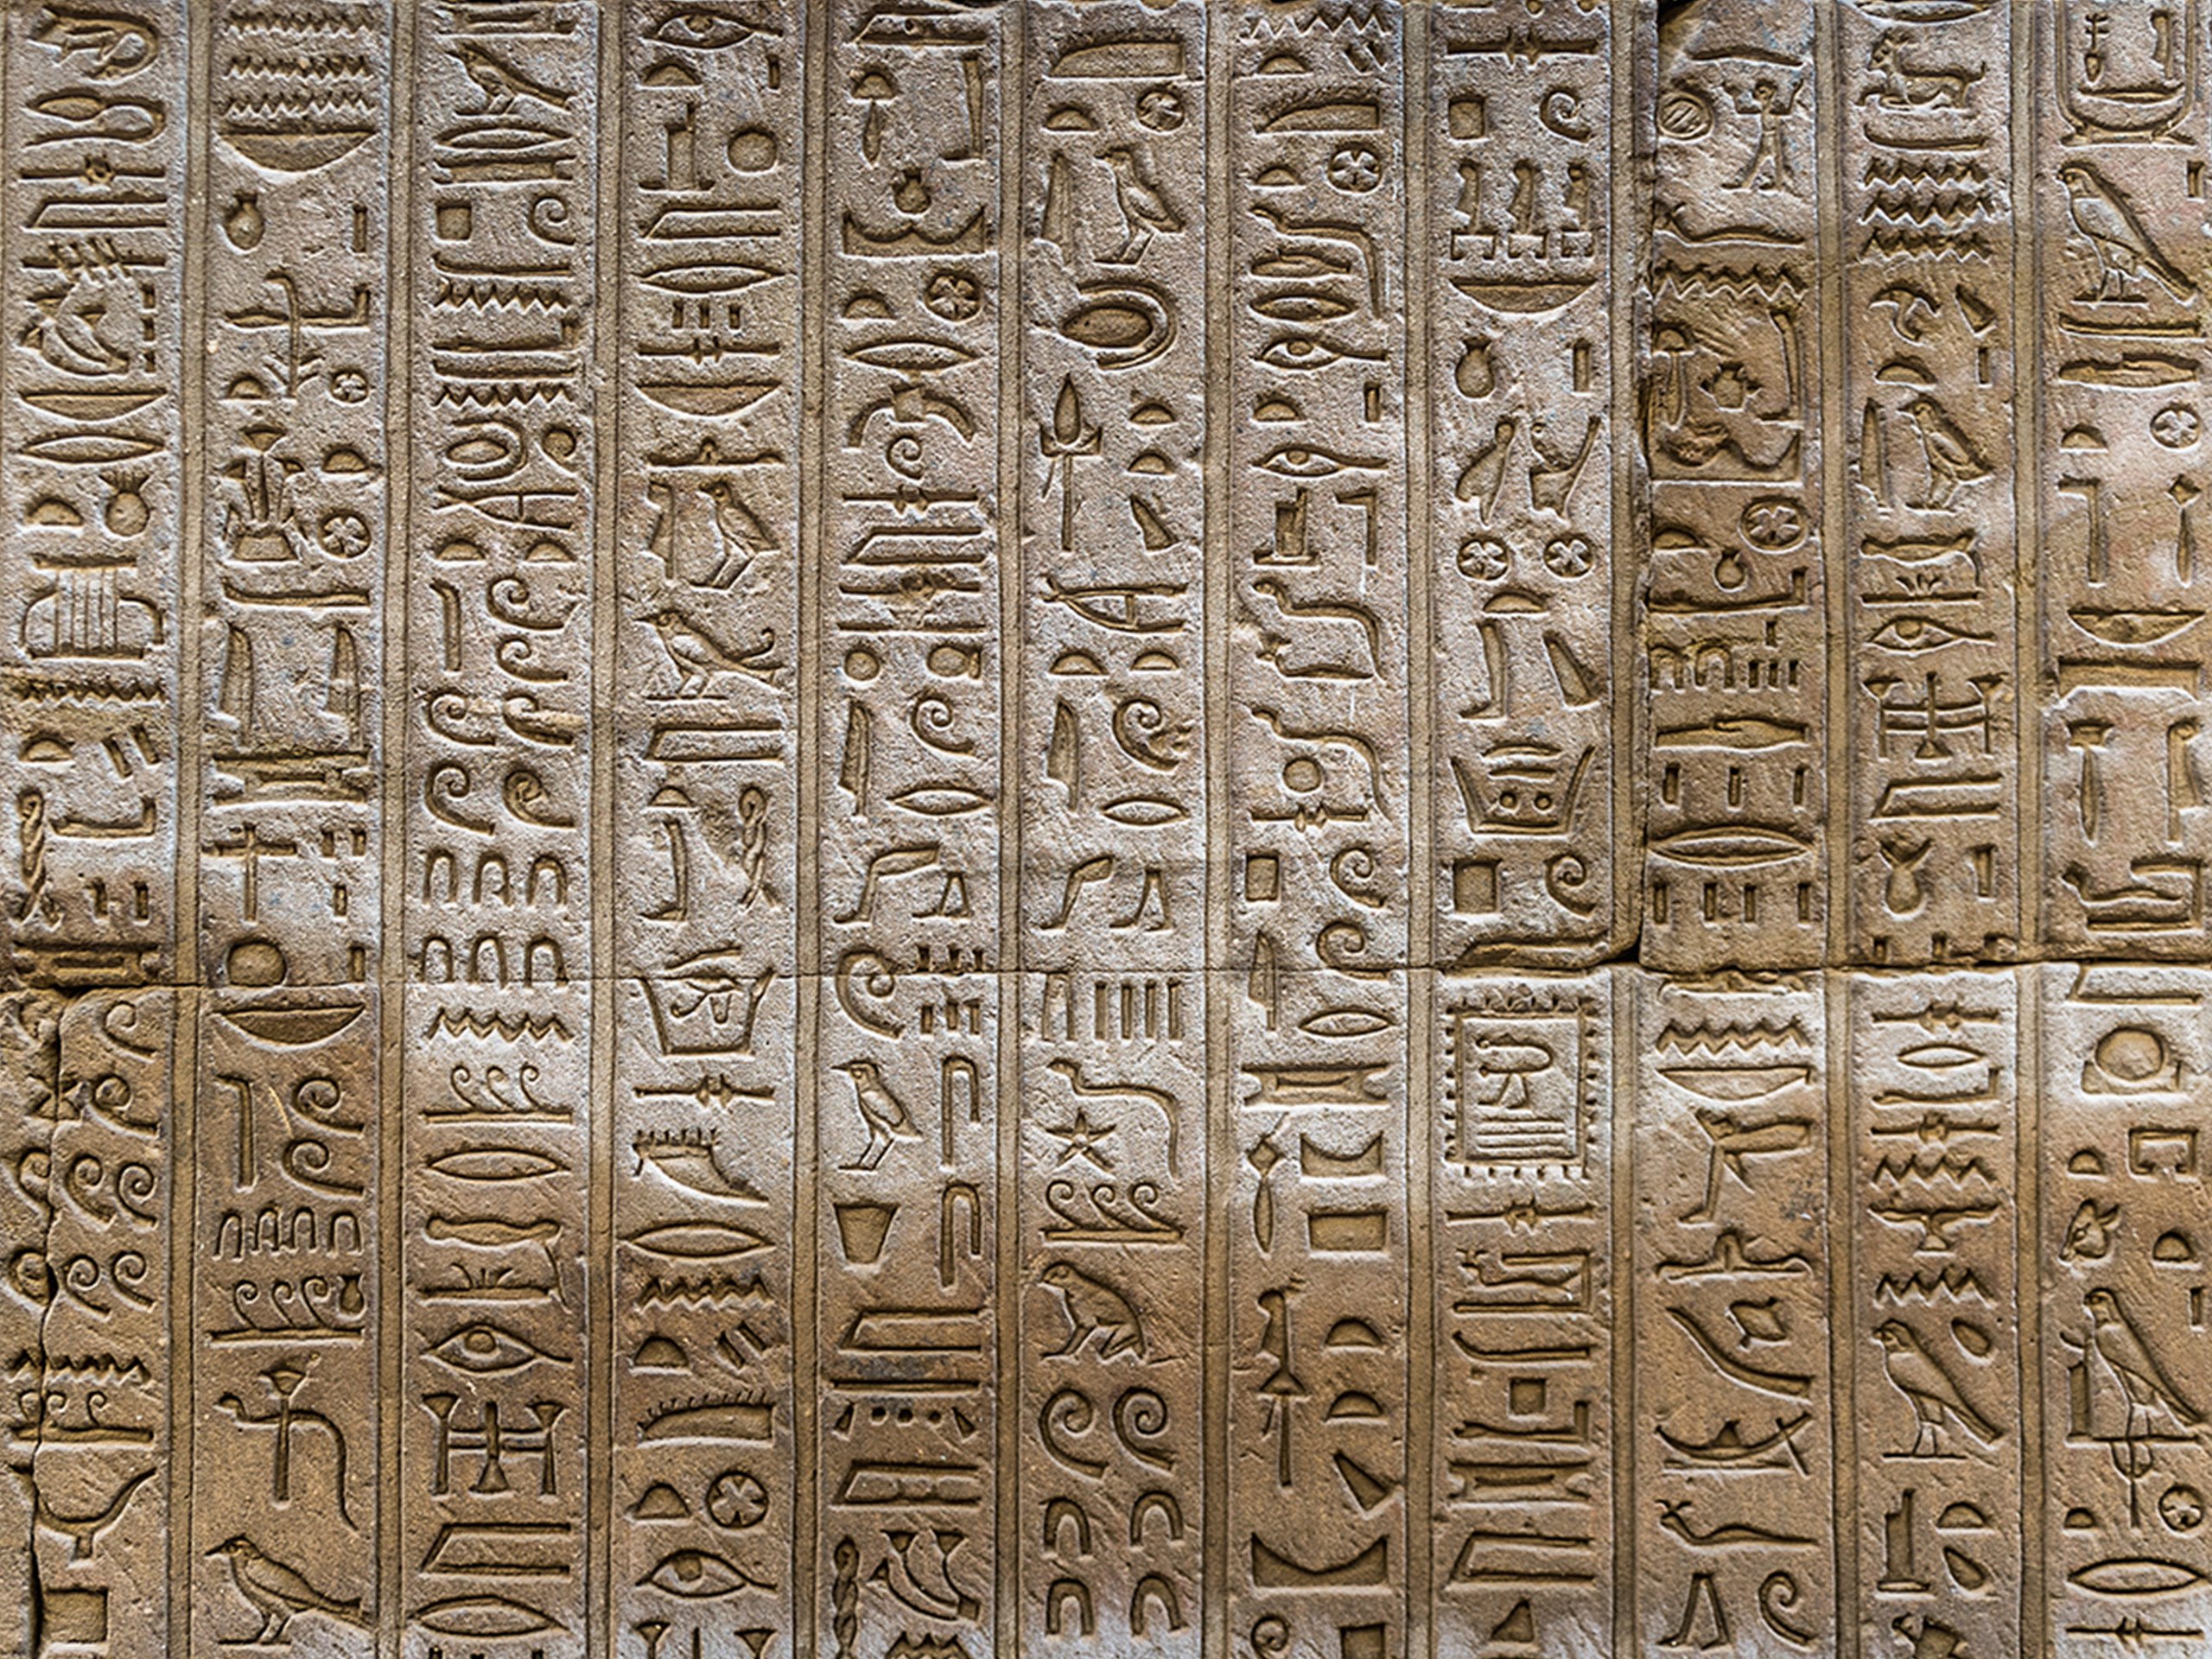 Ancient Egyptian dog hieroglyphics